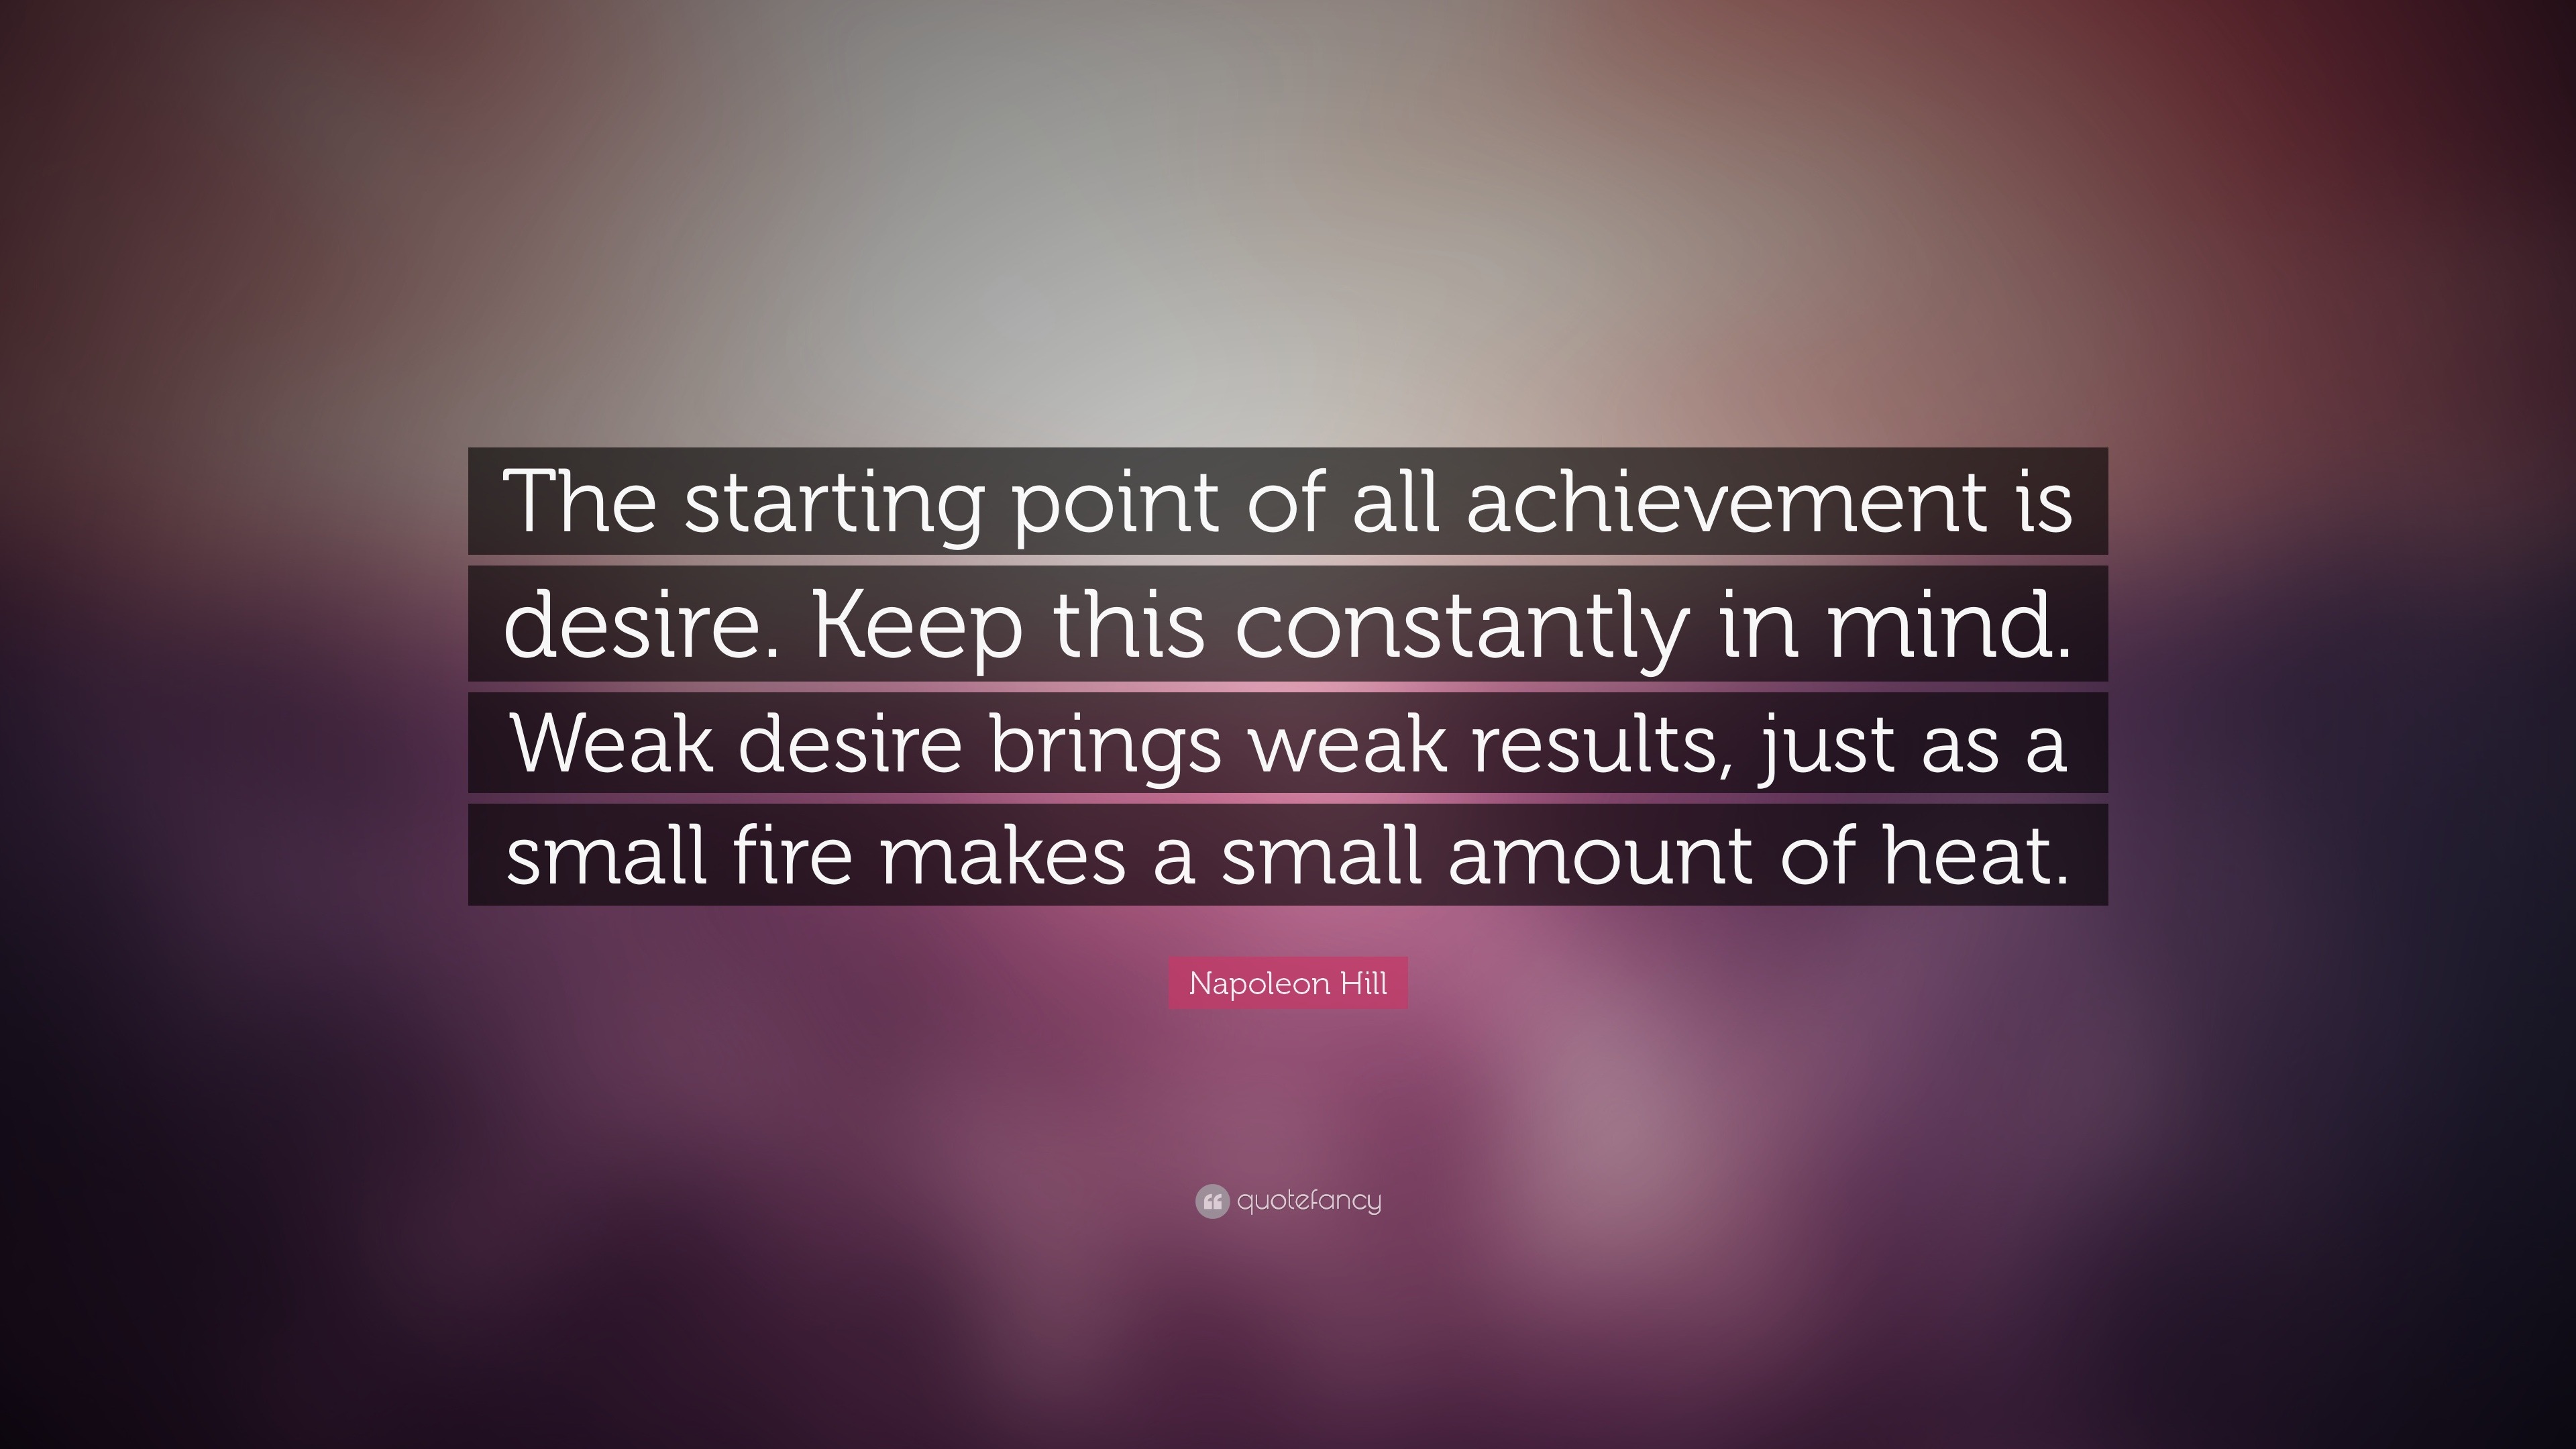 Achievement of desire